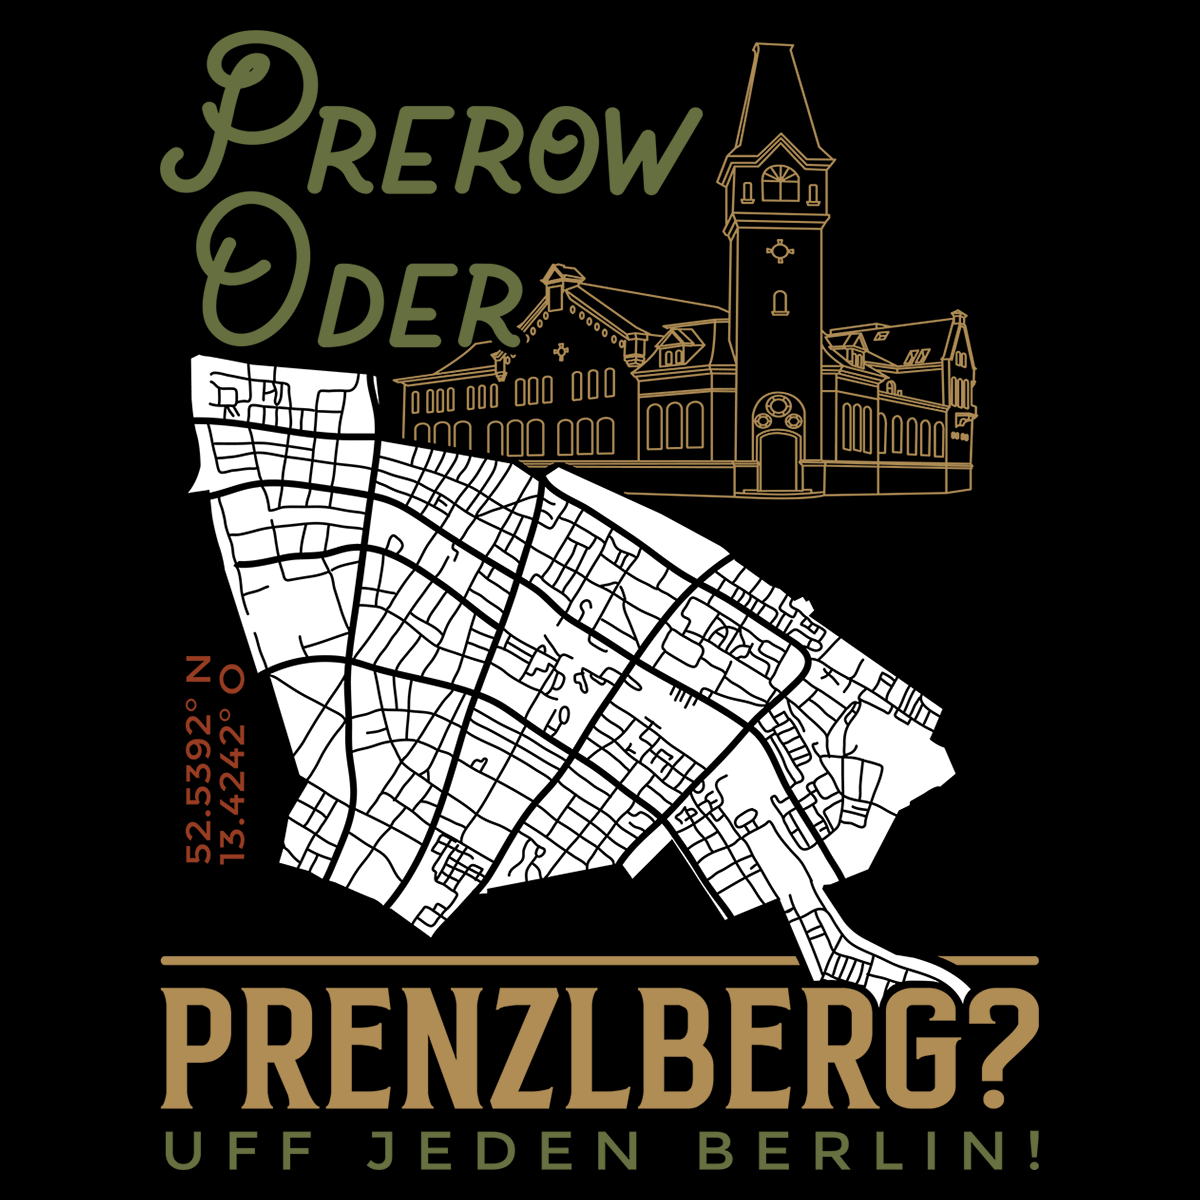 Prerow oder Prenzlberg